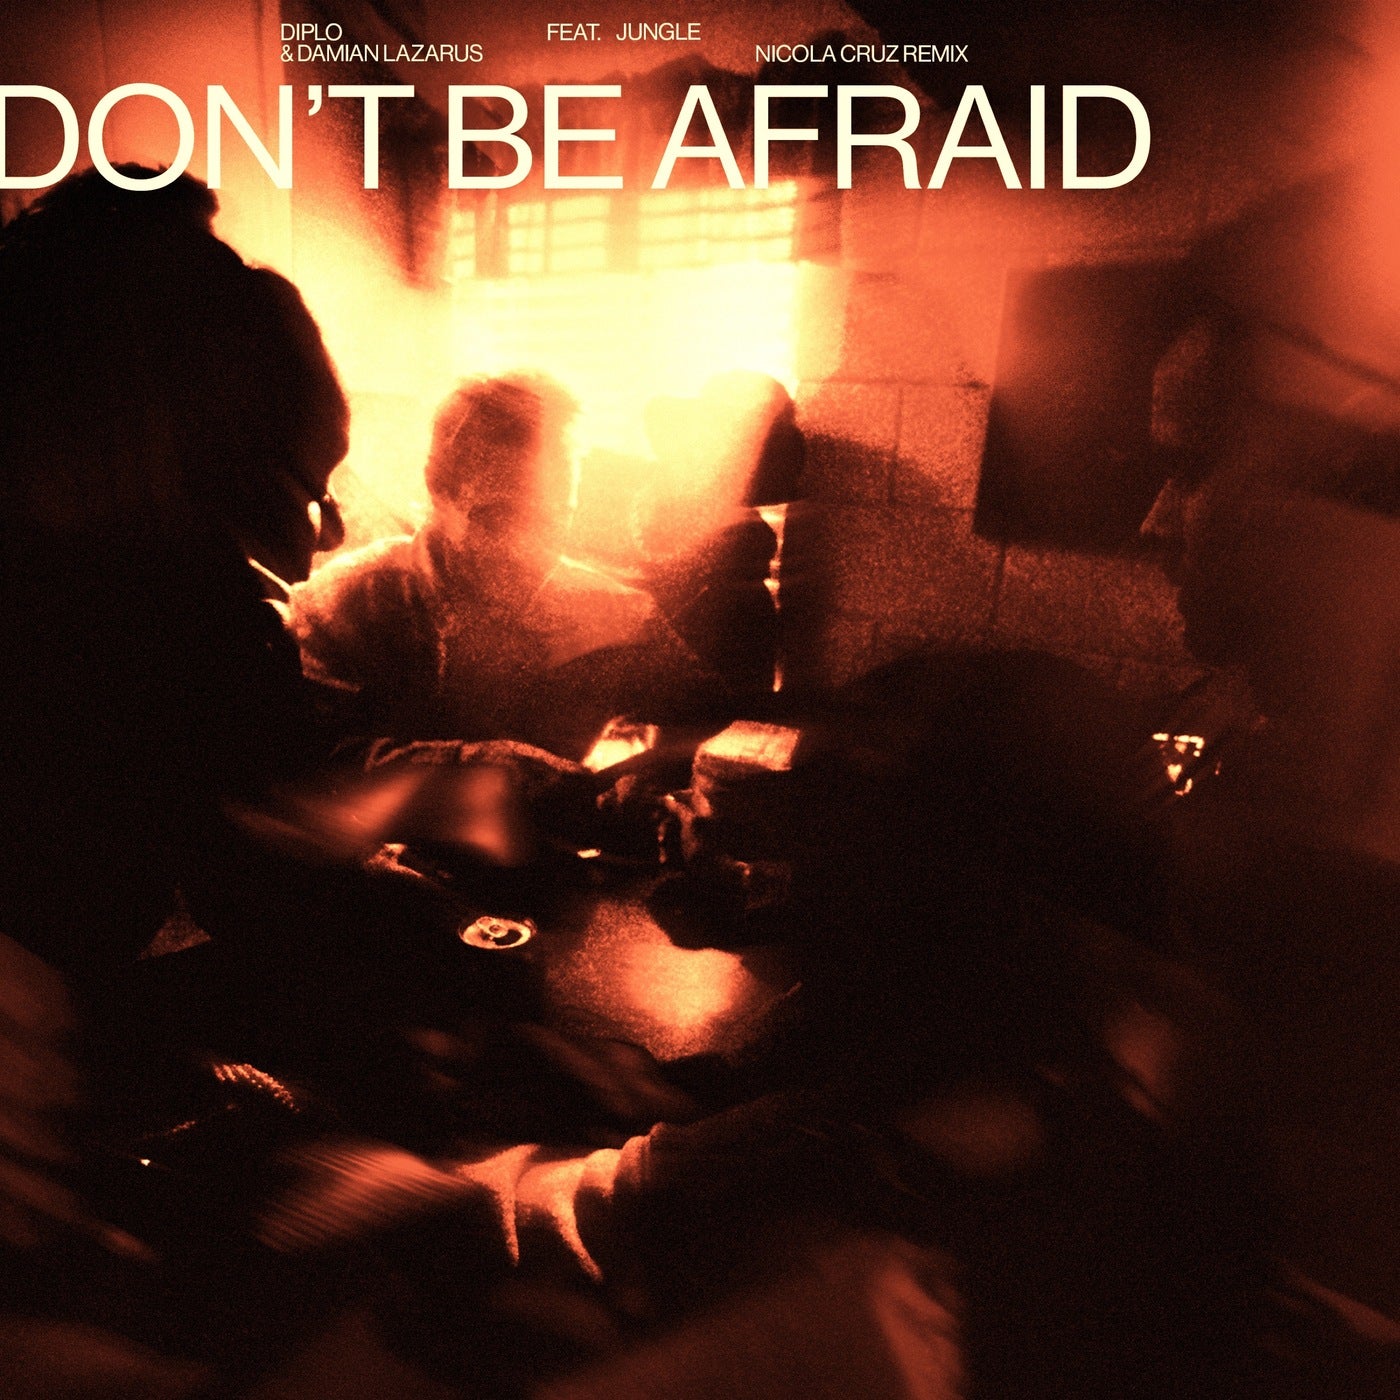 image cover: Diplo, Damian Lazarus, Jungle - Don't Be Afraid feat. Jungle [Nicola Cruz Remix] / BEC5907710